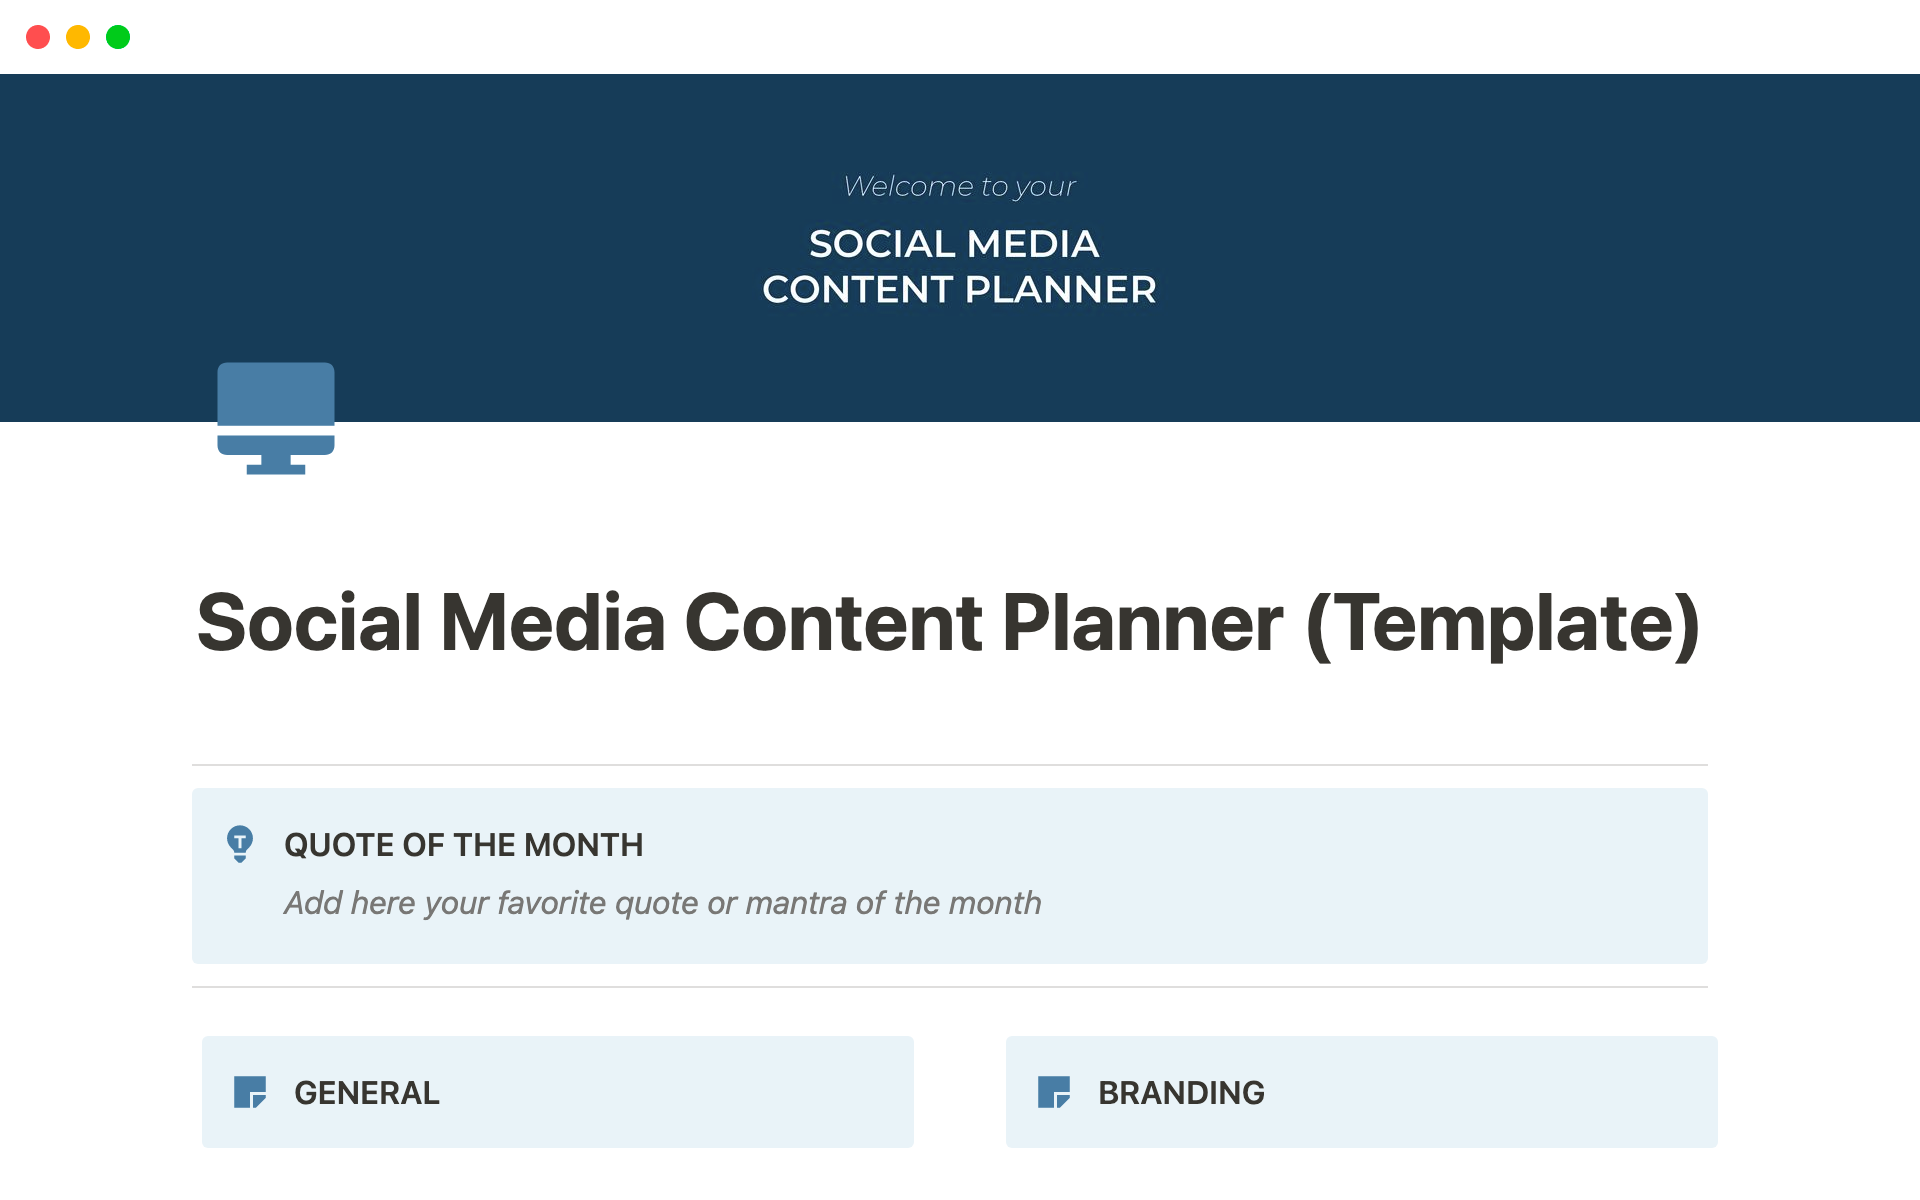 En forhåndsvisning av mal for Social Media Content Planner: Unleash your social media potential with our content planner!